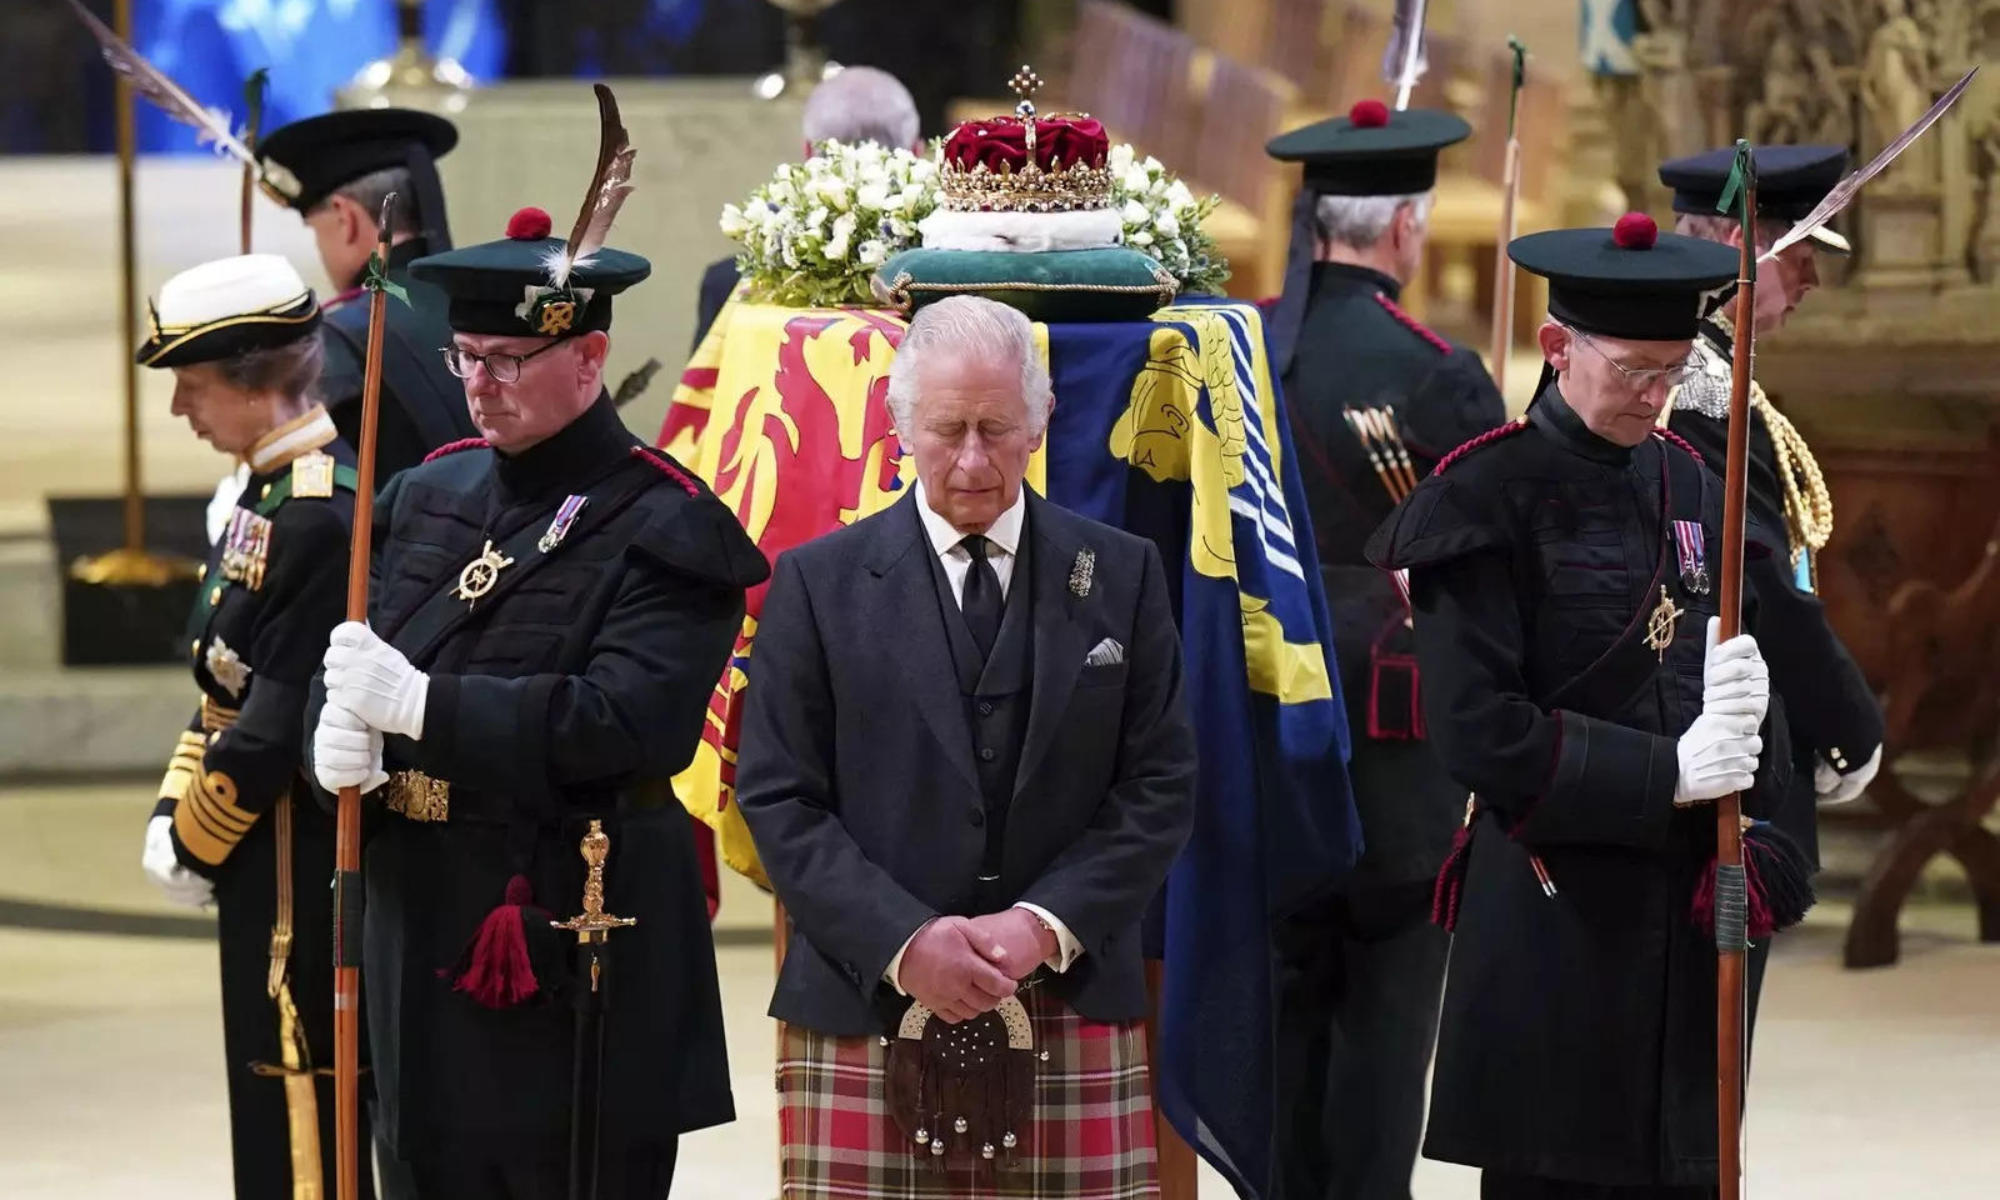 Queen Elizabeth II funeral, buried at Windsor Castle's St. George's Chapel_30.1